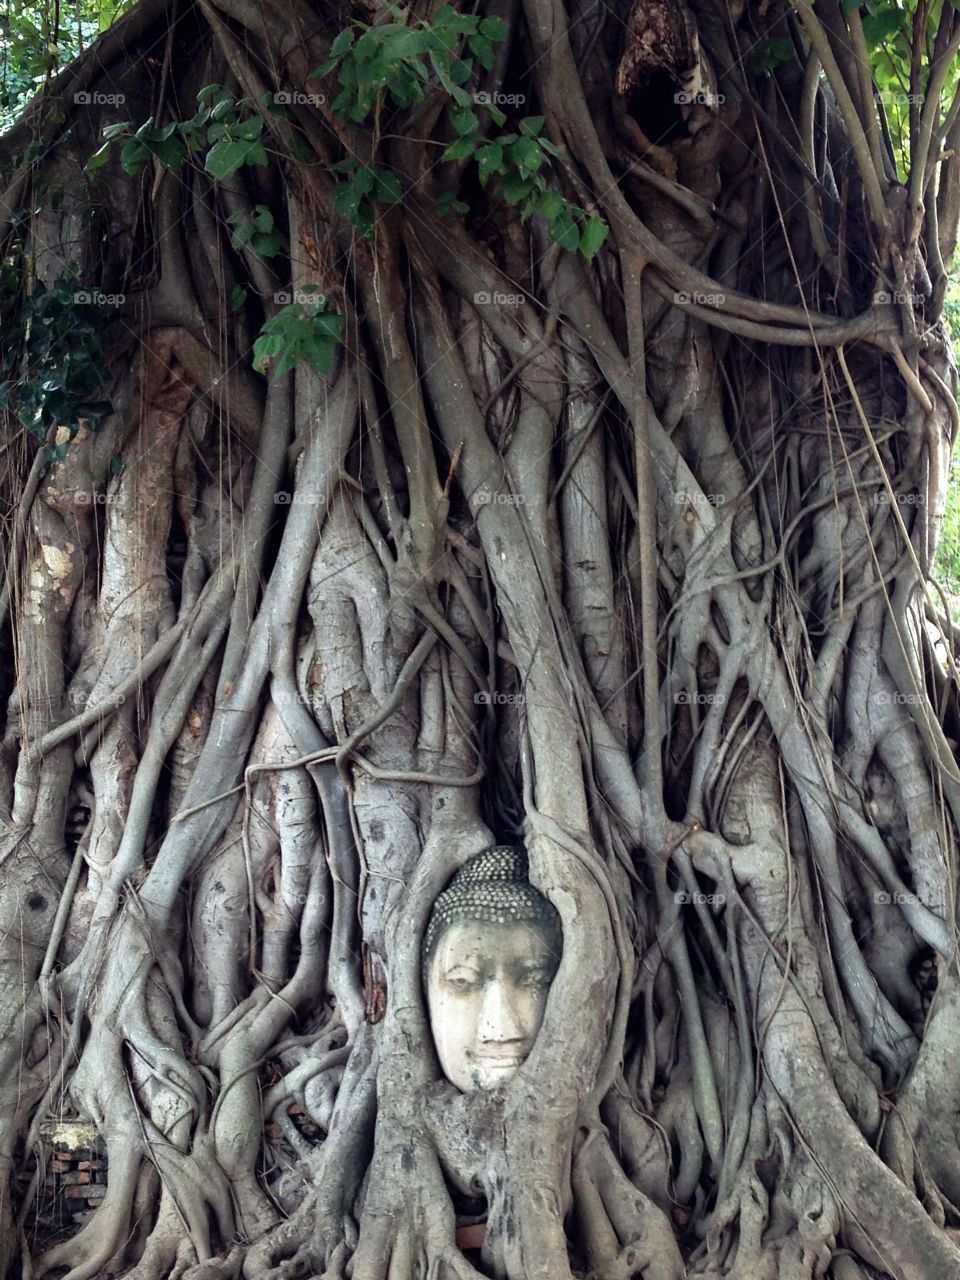 Buddha head in tree roots, Ayutthaya, Thailand
